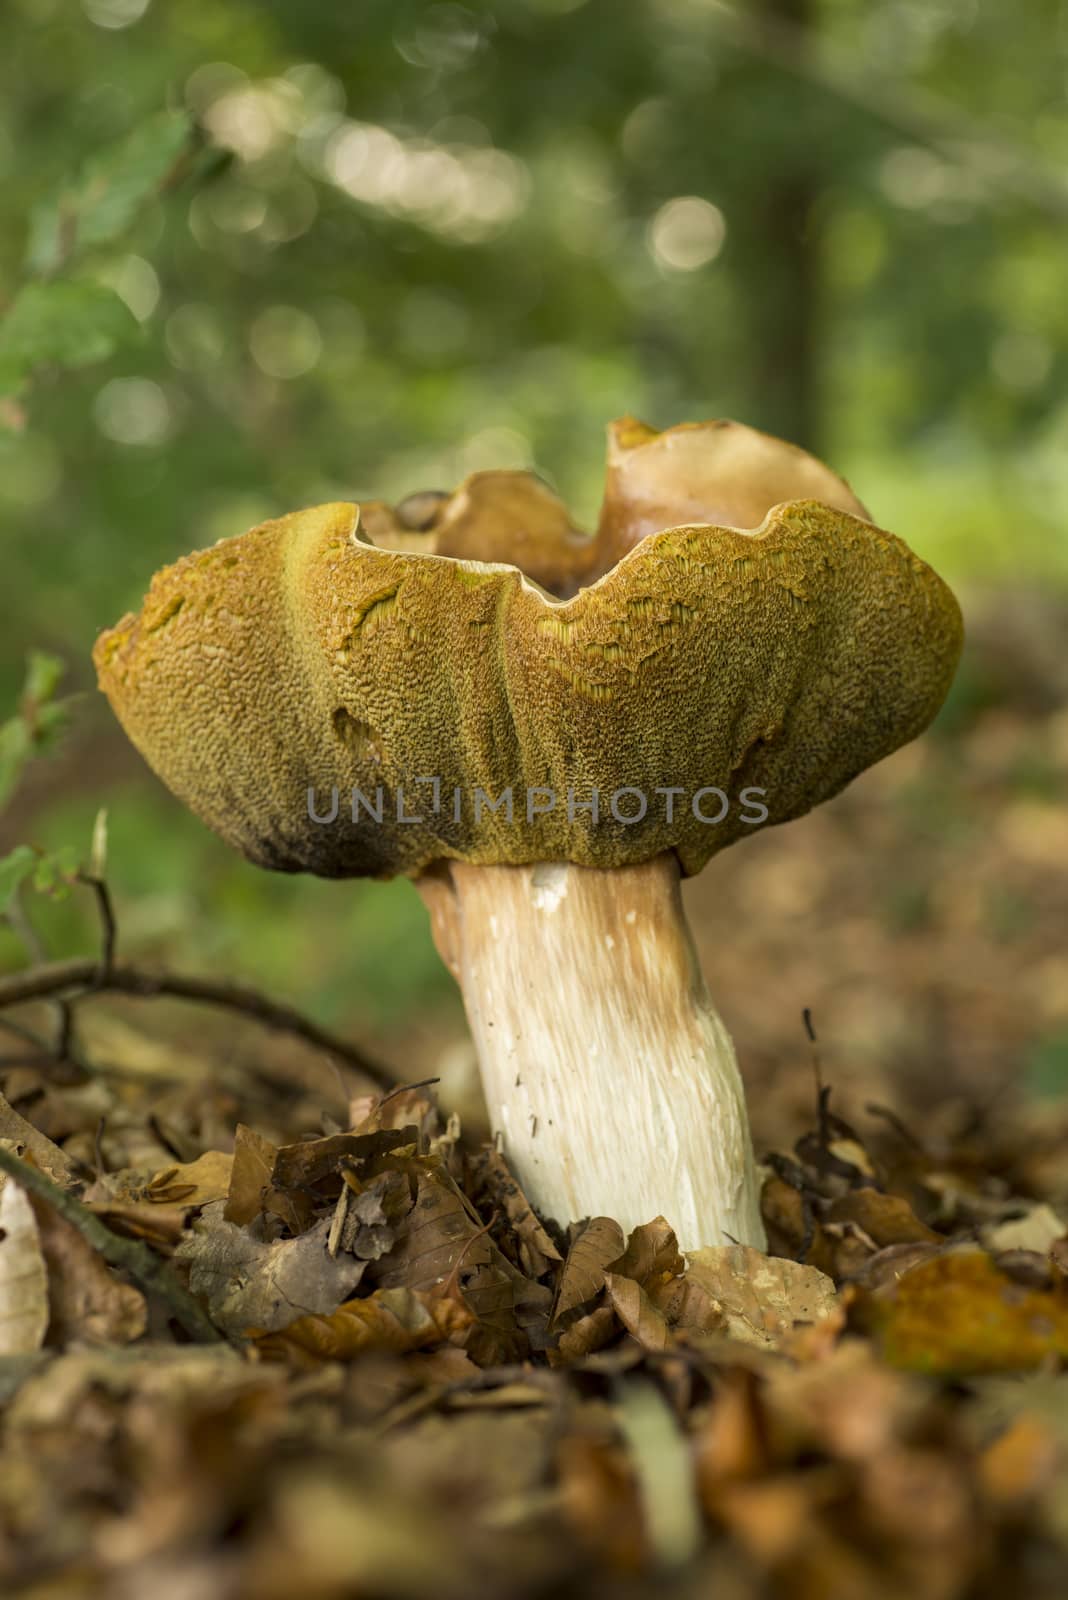 Mushroom Boletis Edulis by Tofotografie